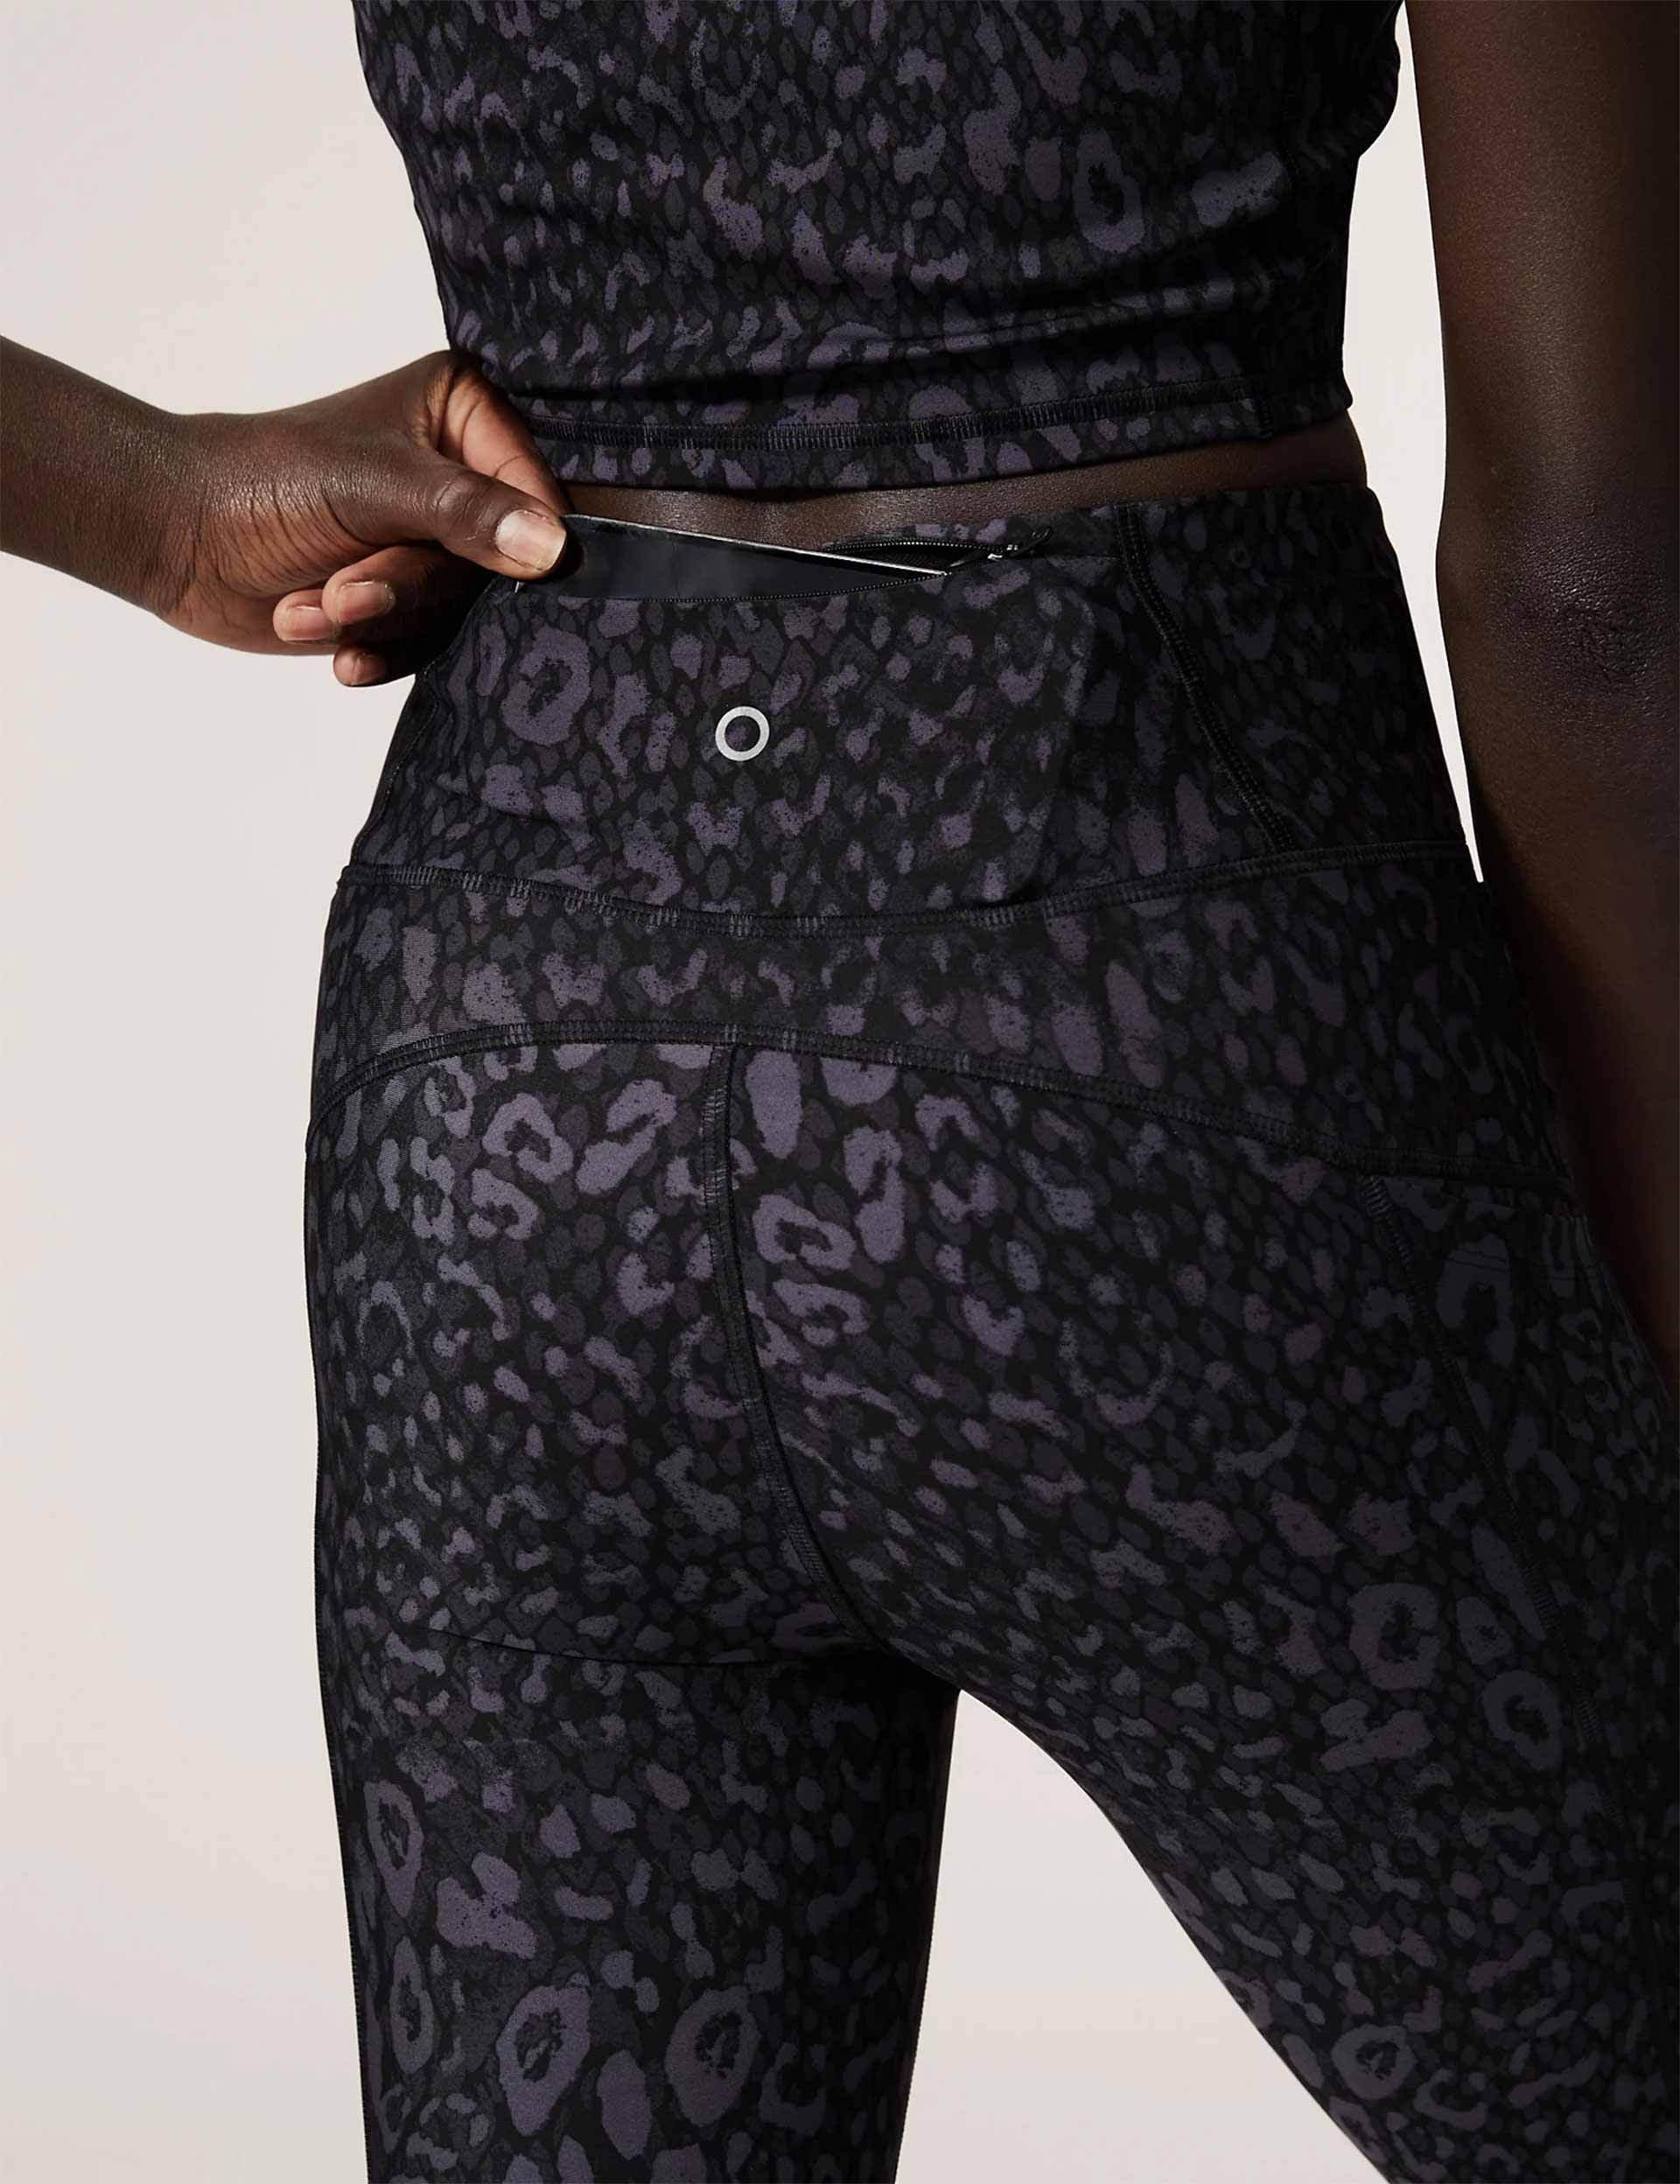 Alora ColorBlock High Waist Gym Leggings (Black Grey) –  fashionimperative.com